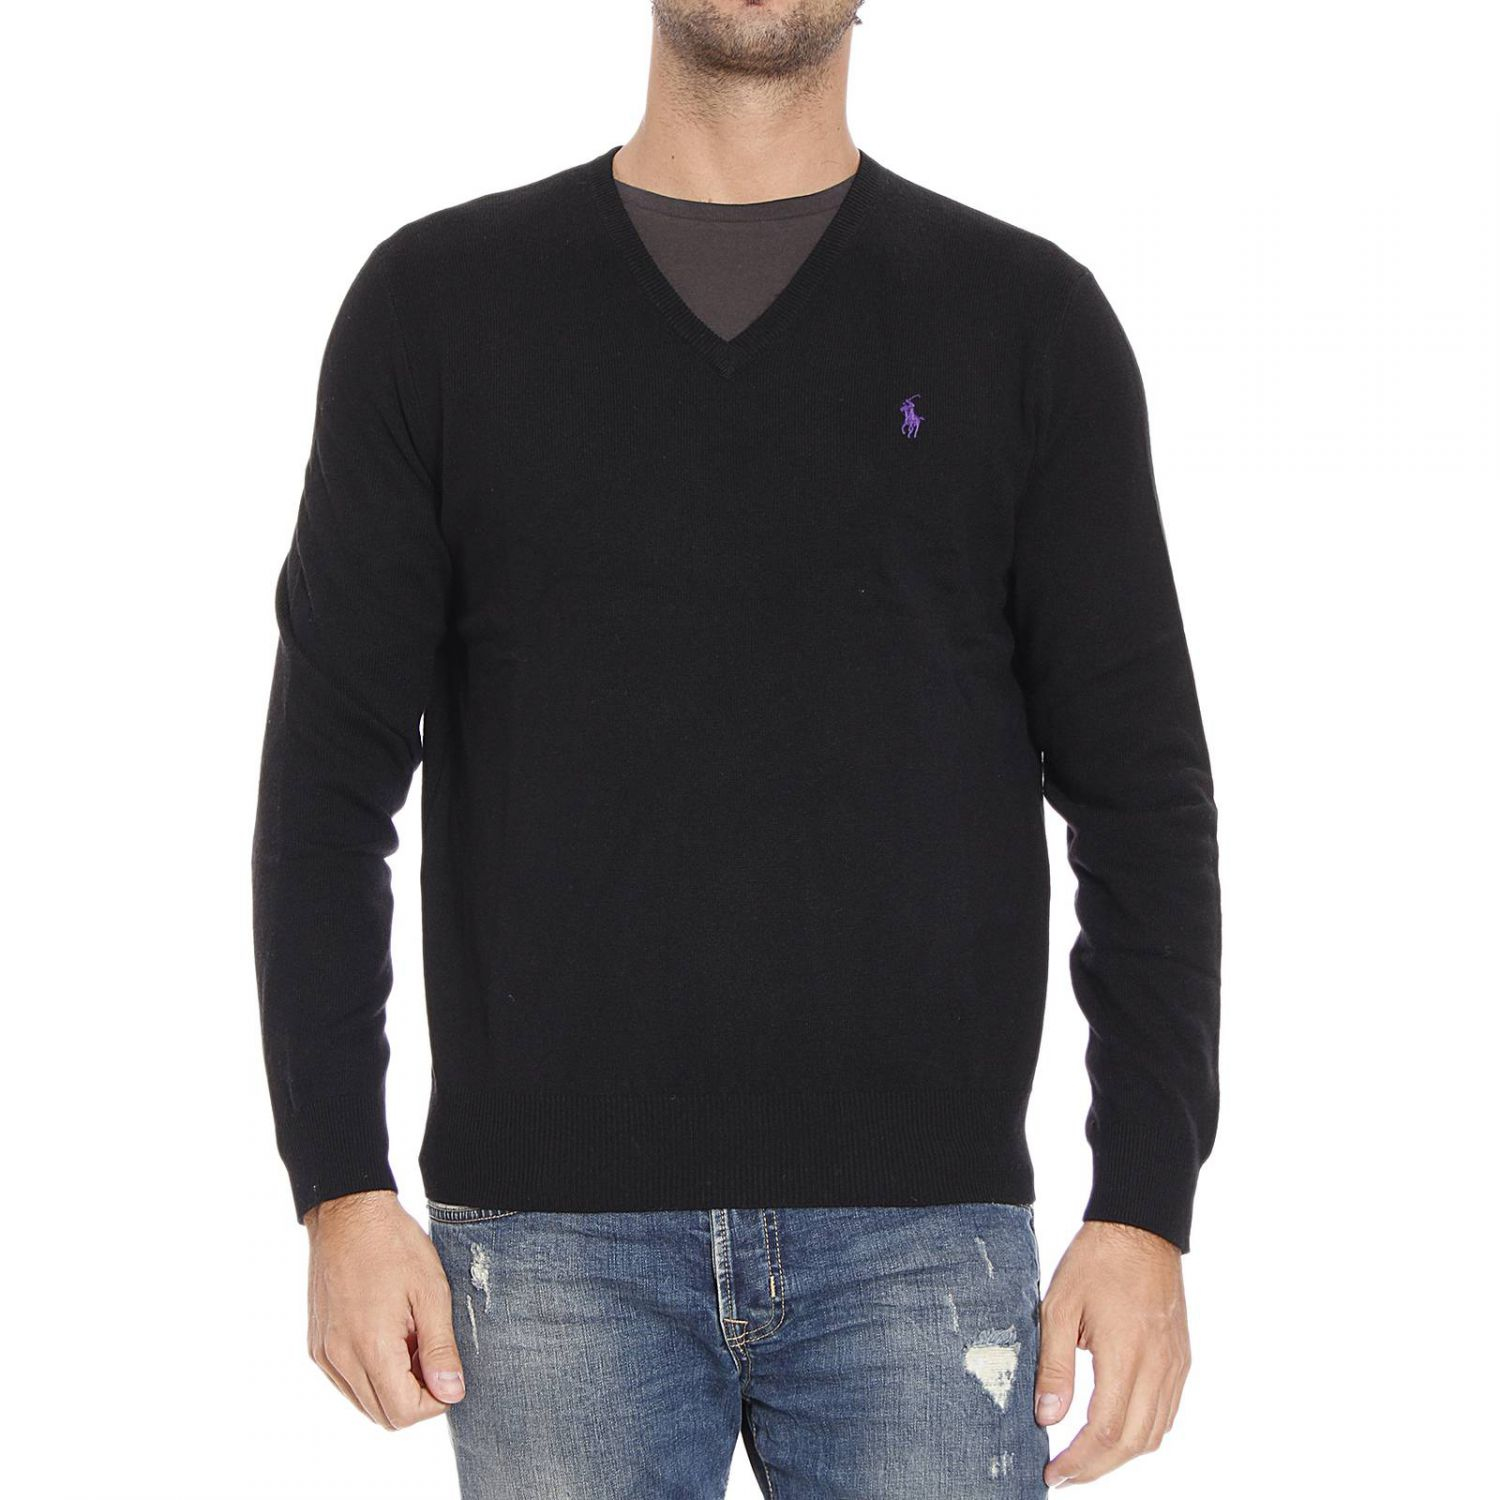 Polo Ralph Lauren Sweater in Black for Men - Lyst